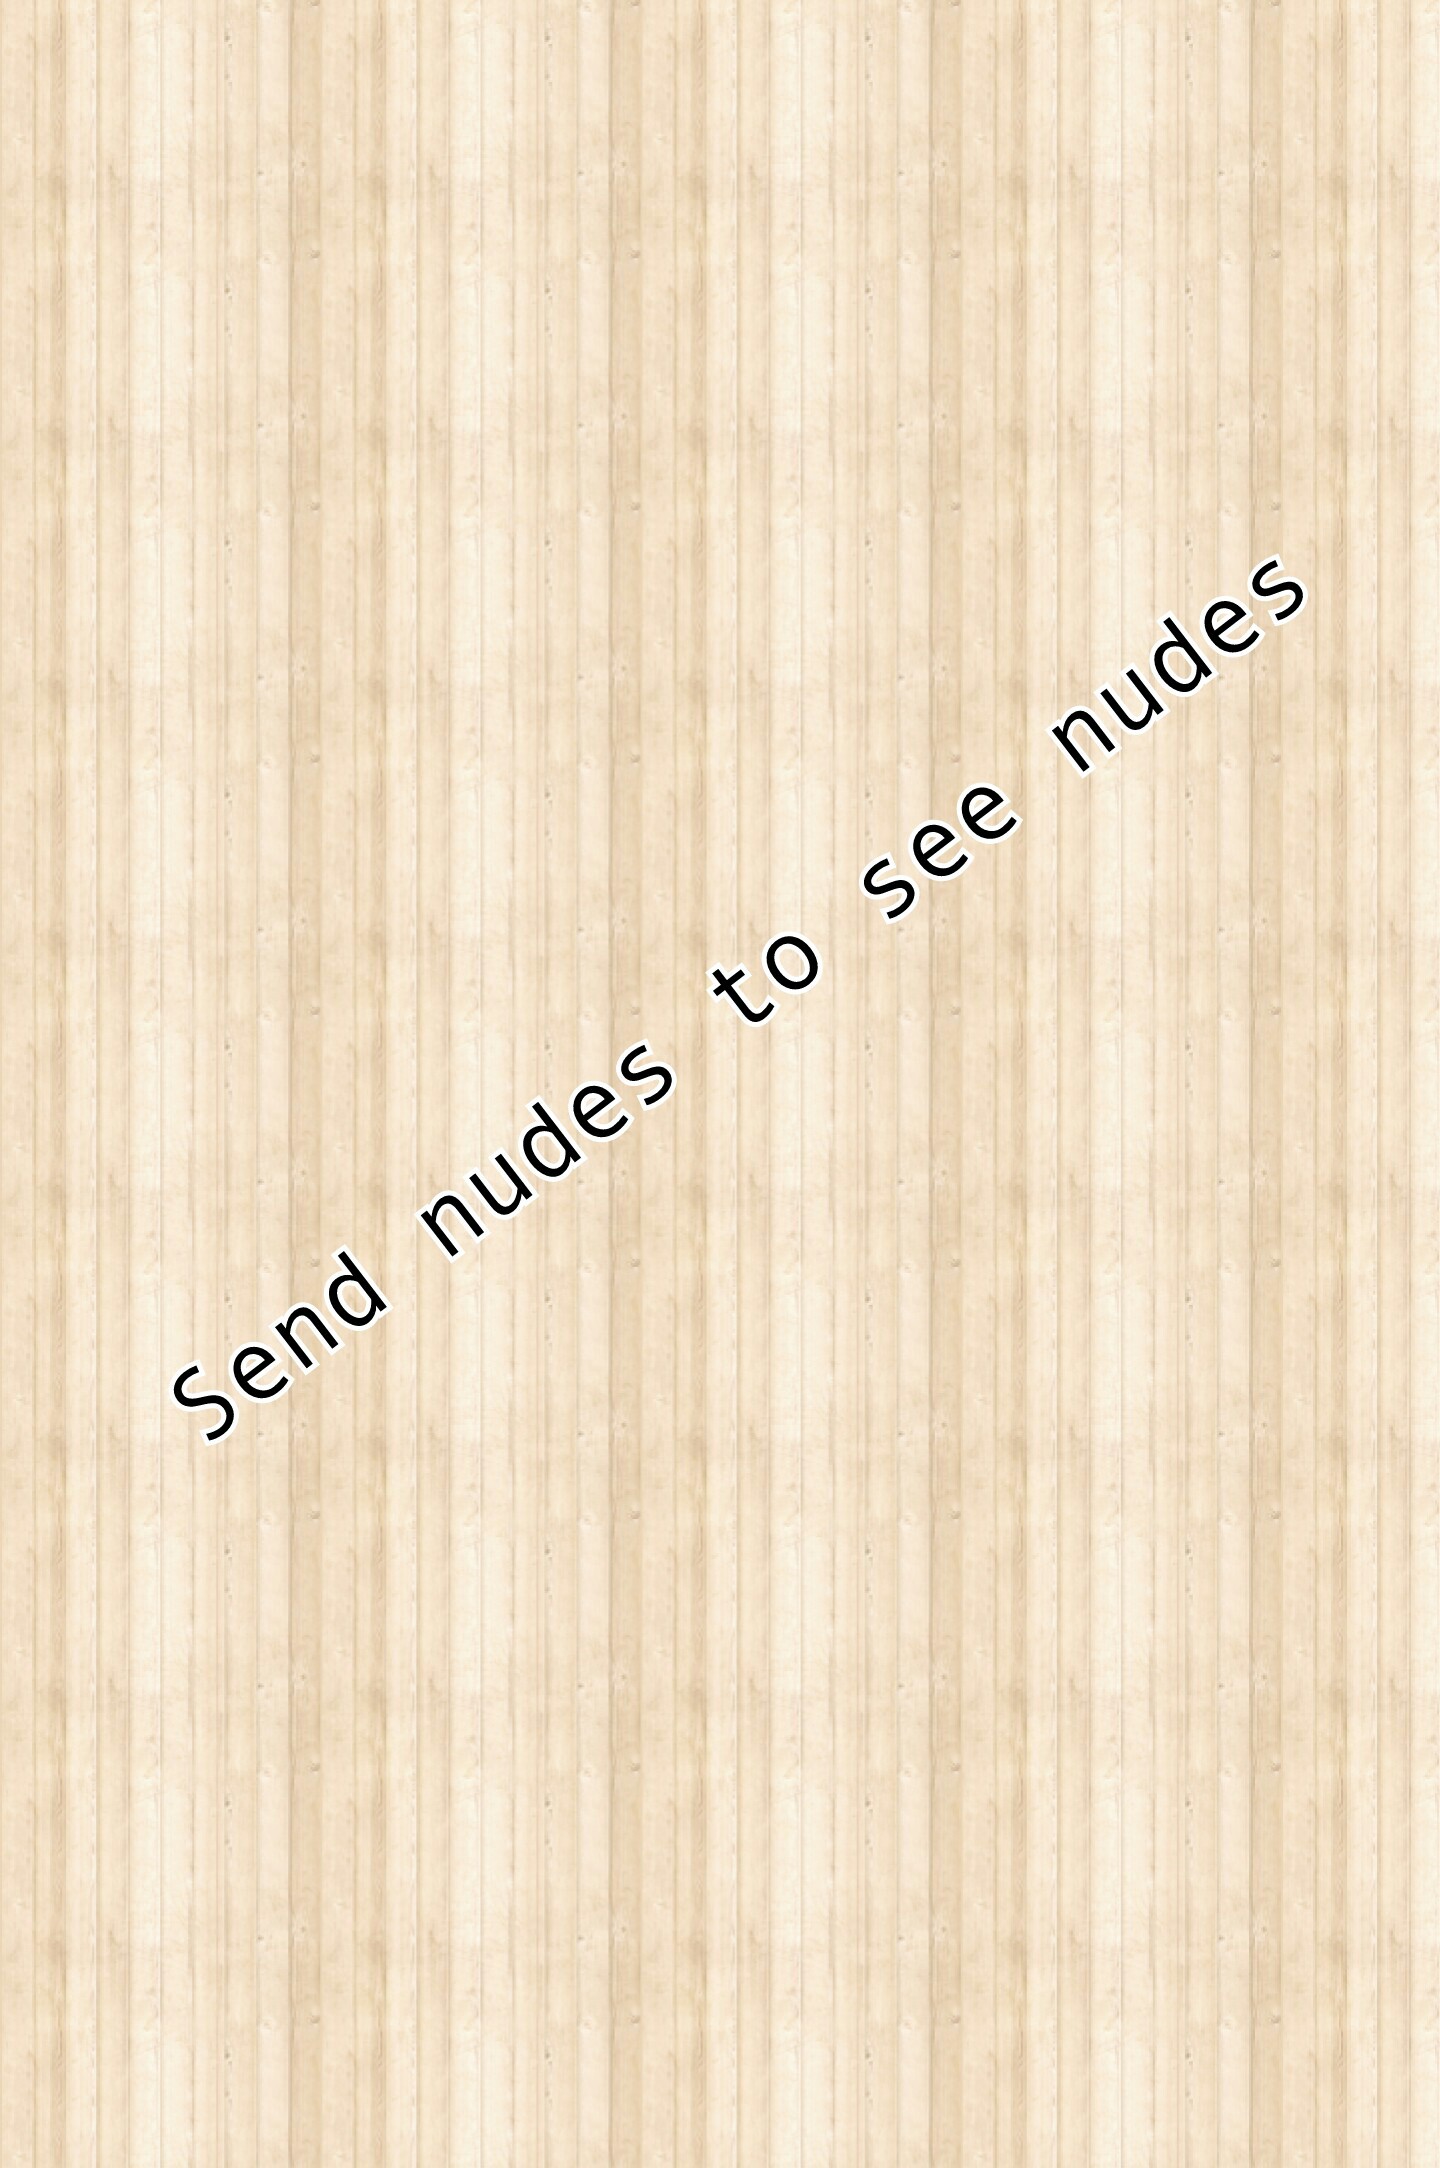 Send nudes to see nudes